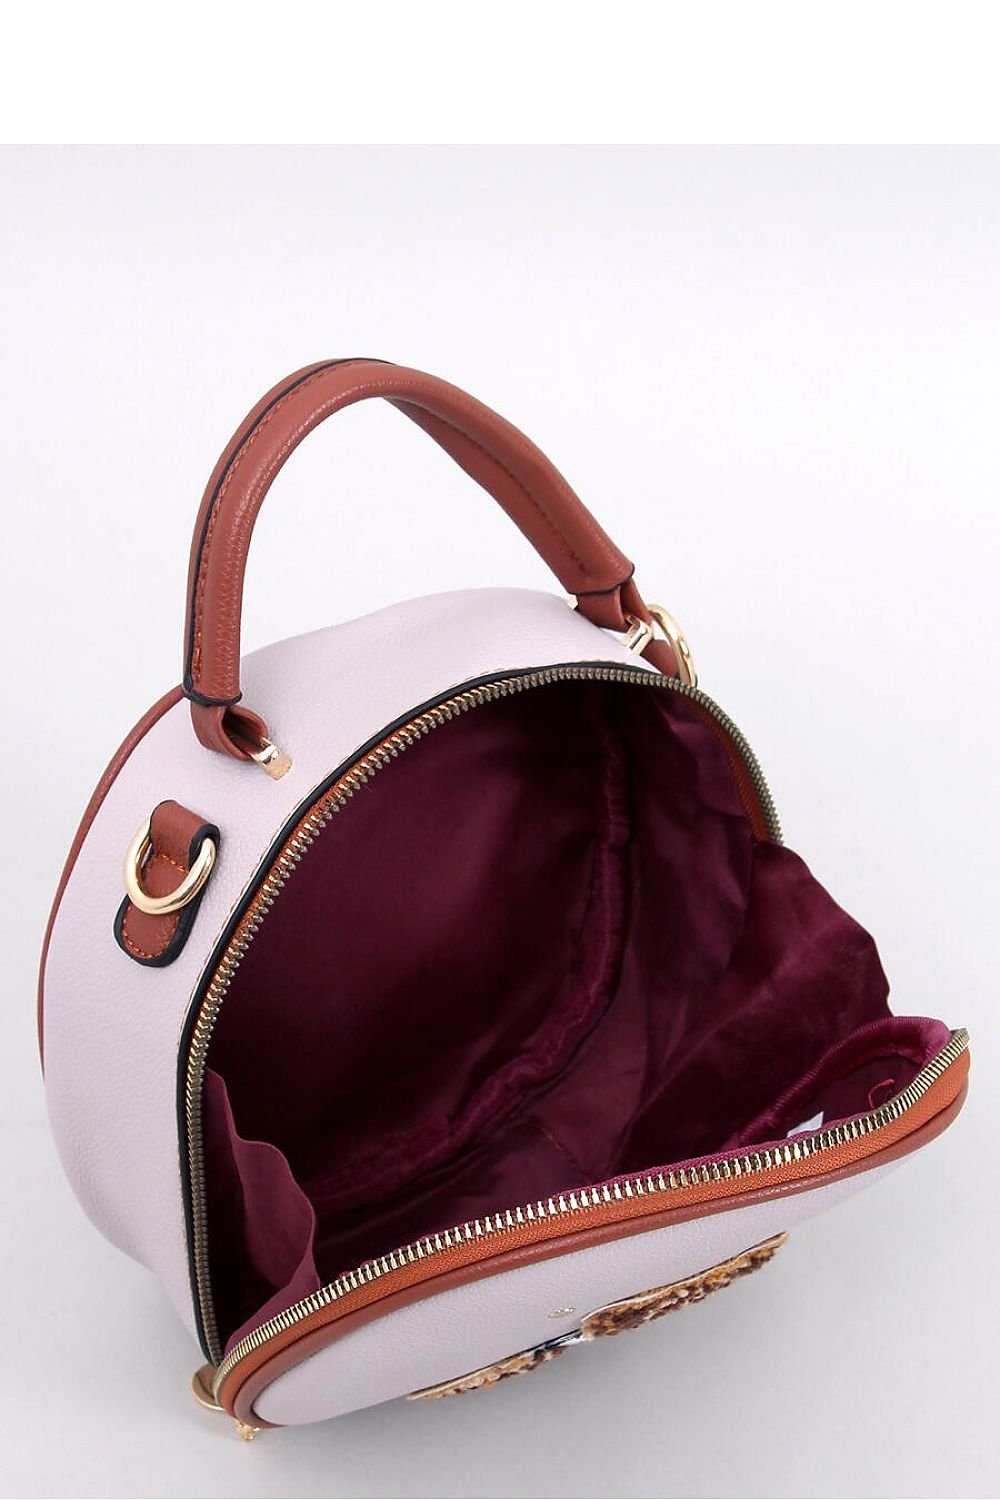 Teddy Bear Trunk Bag - Chic Ecological Leather Handbag